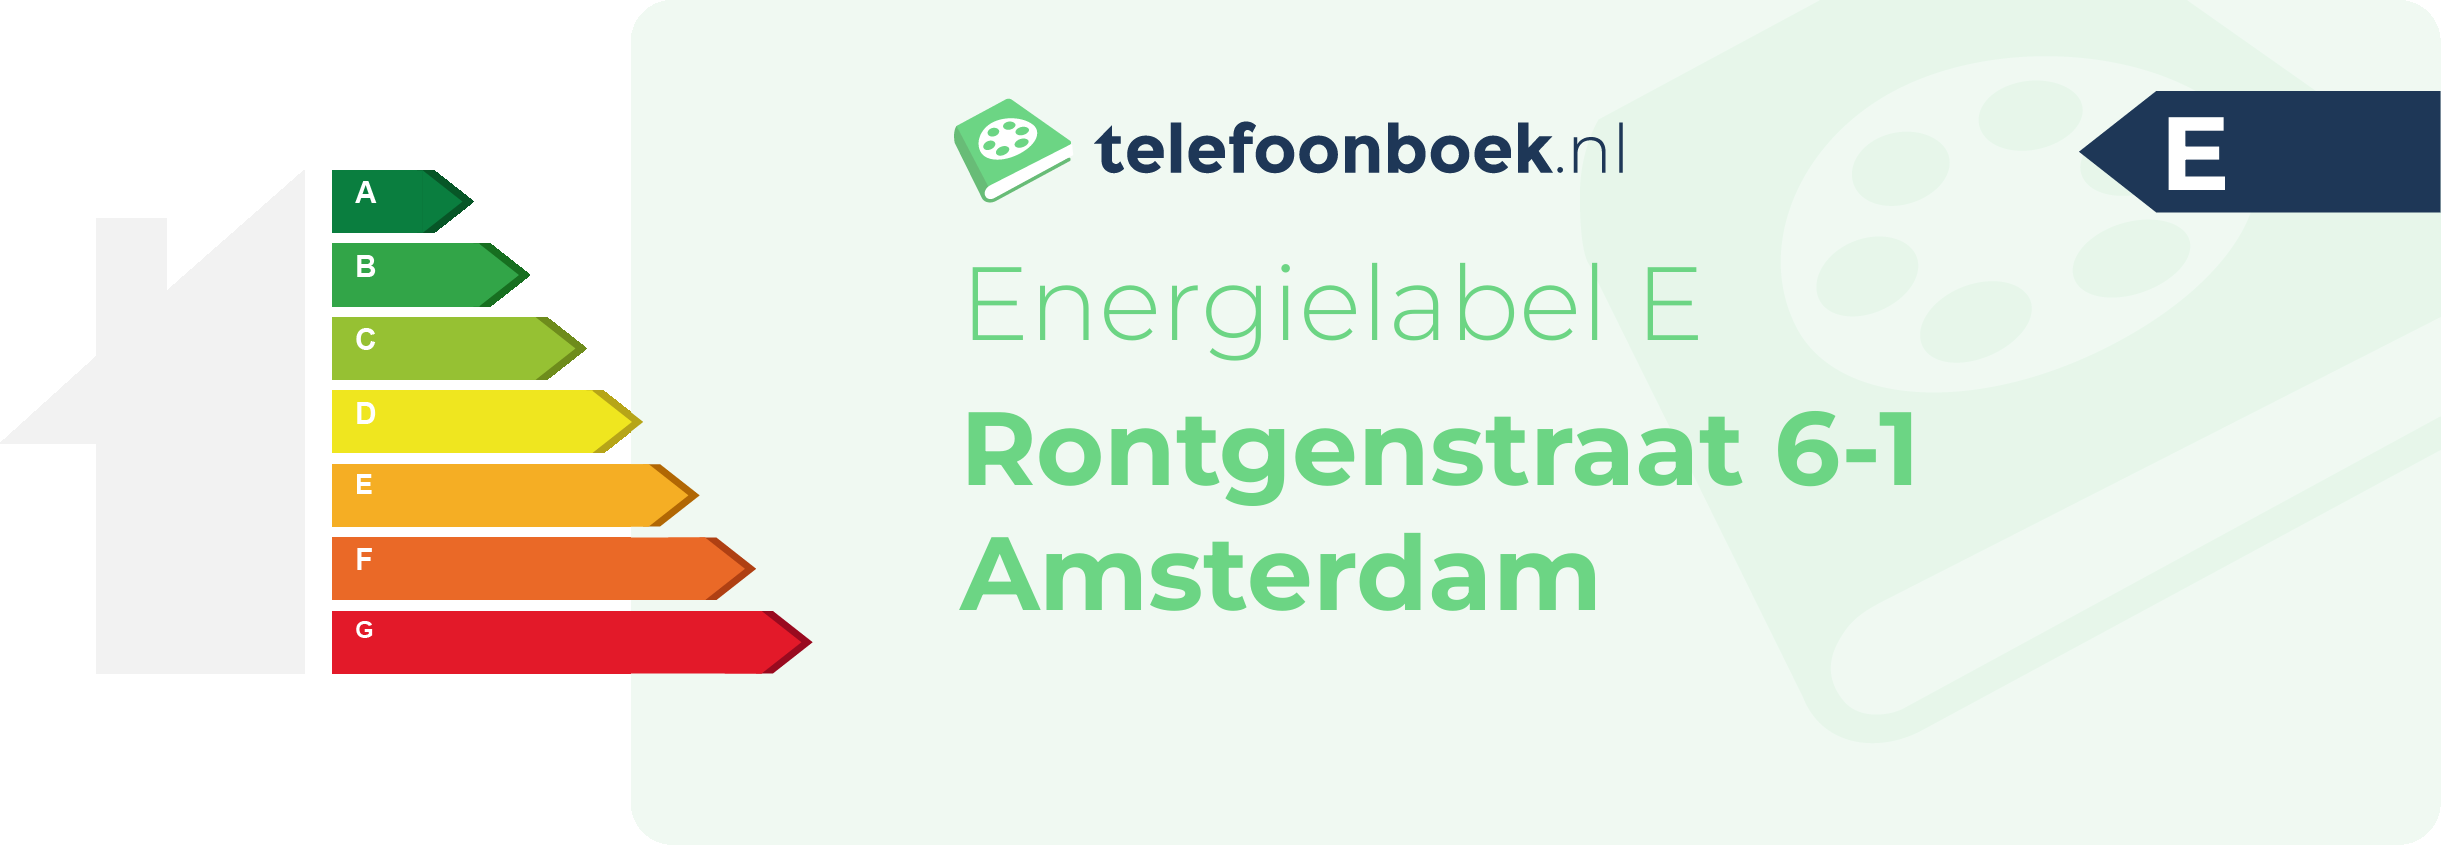 Energielabel Rontgenstraat 6-1 Amsterdam